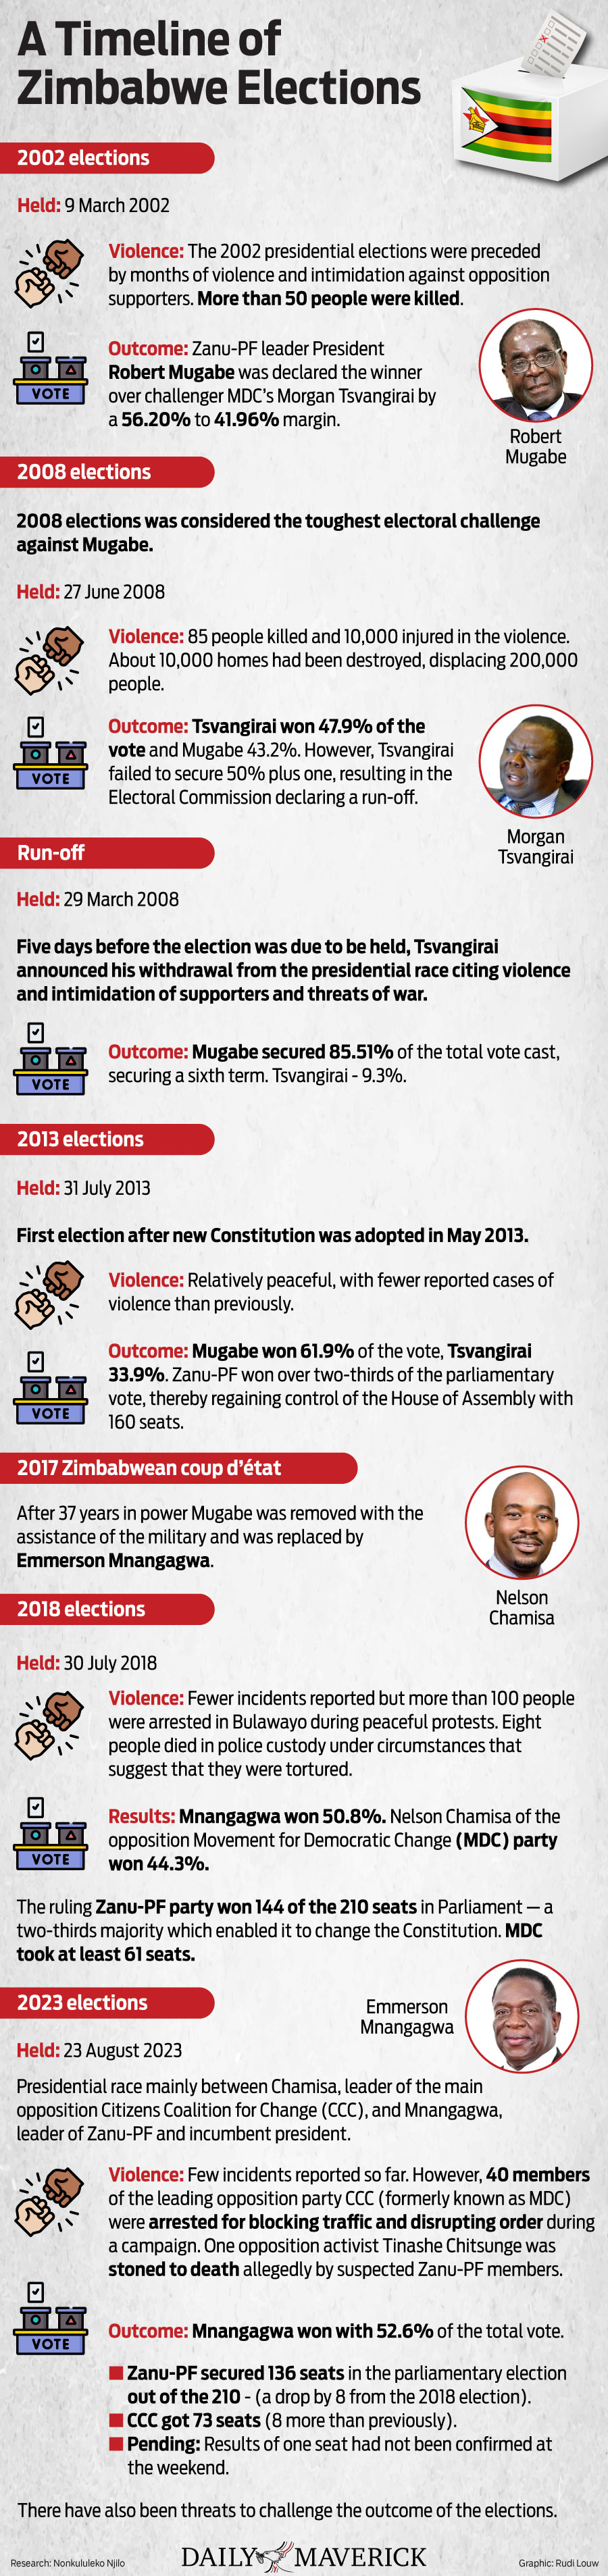 Timeline of Zimbabwe elections 2023